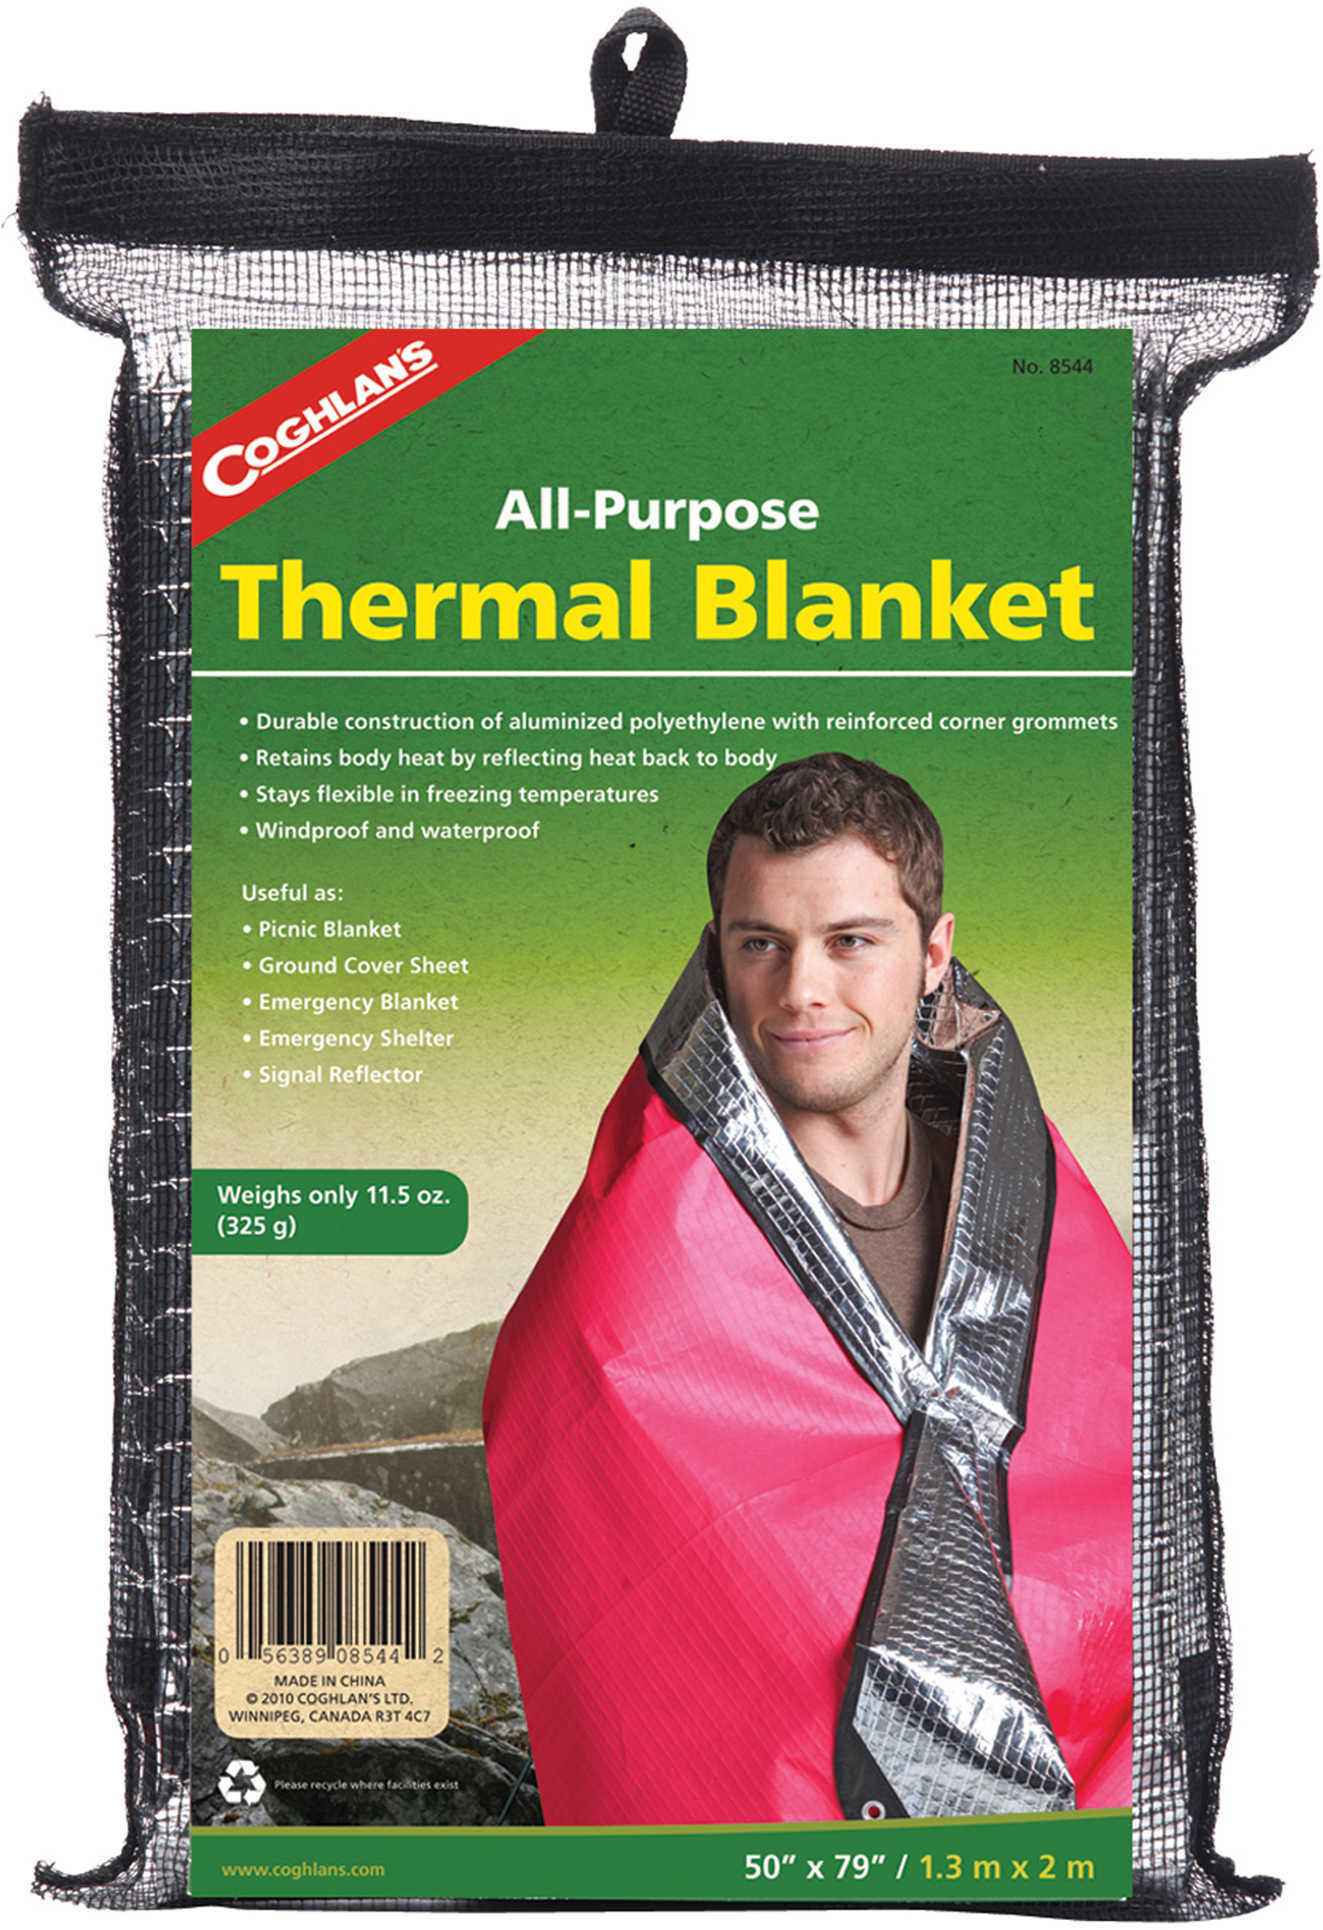 Coghlans Thermal Blanket 8544